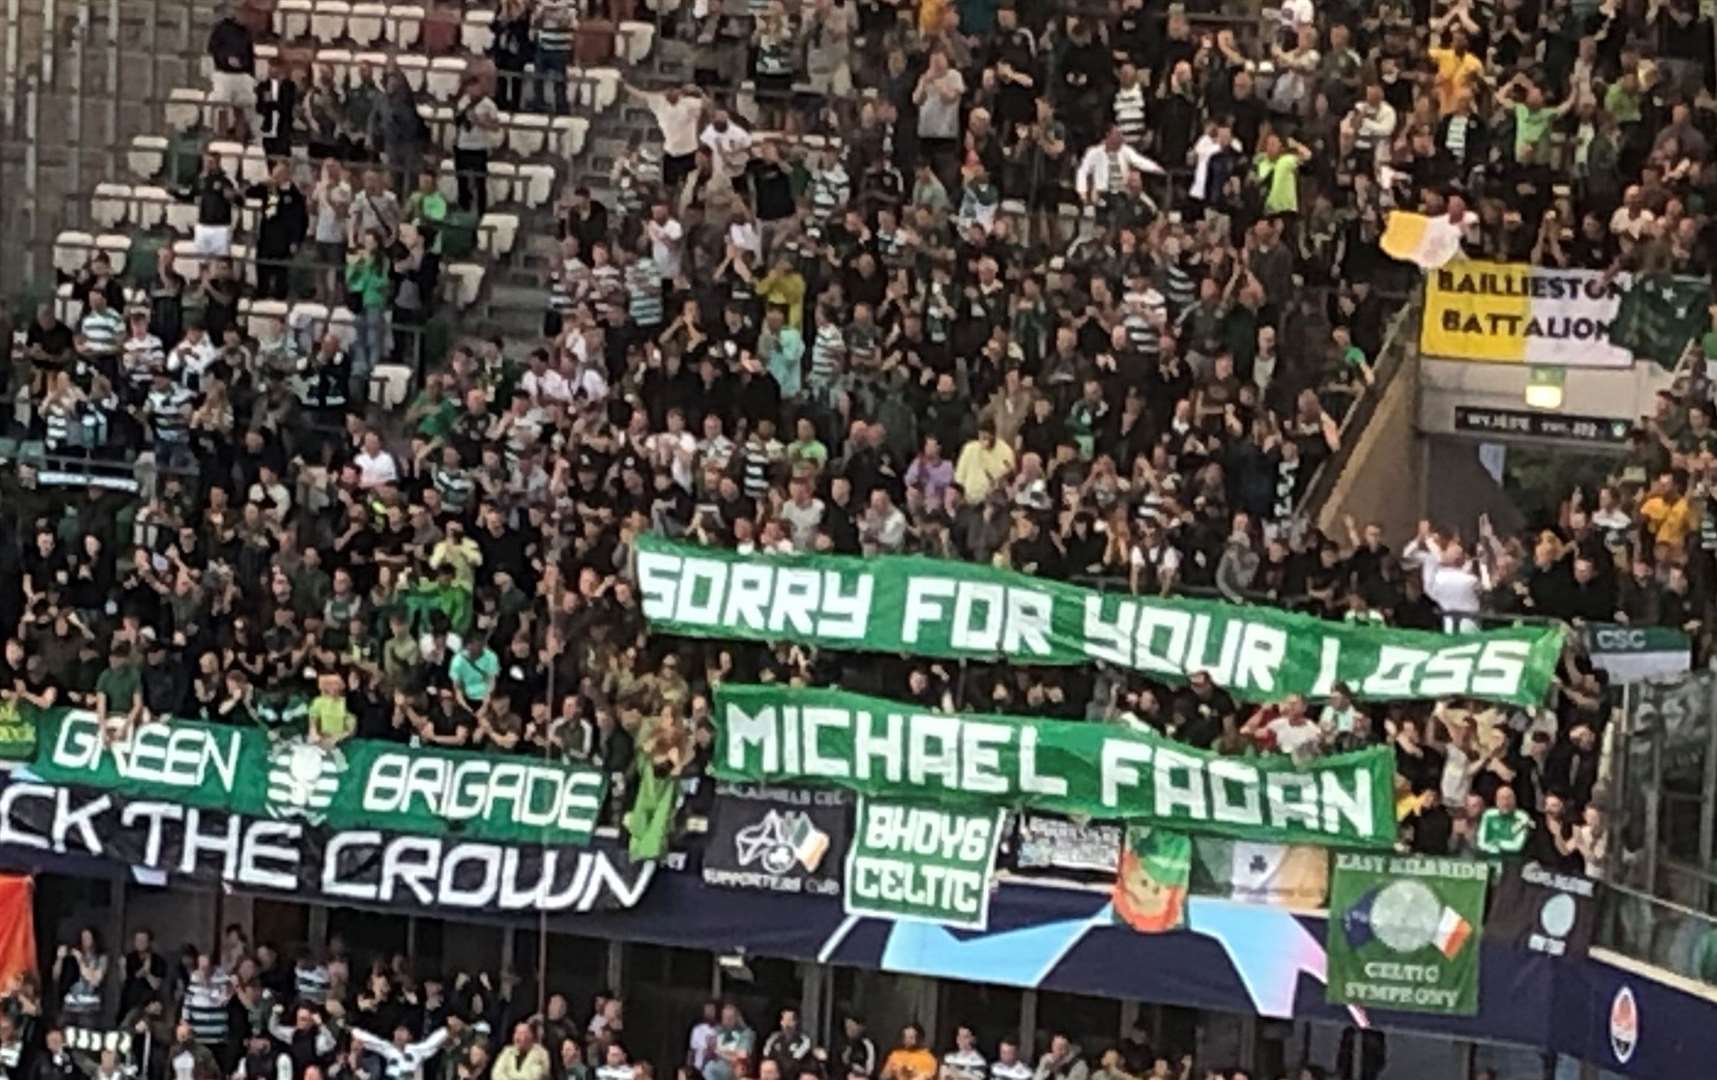 Celtic fans displayed anti-monarchy banners (Gavin McCafferty/PA)